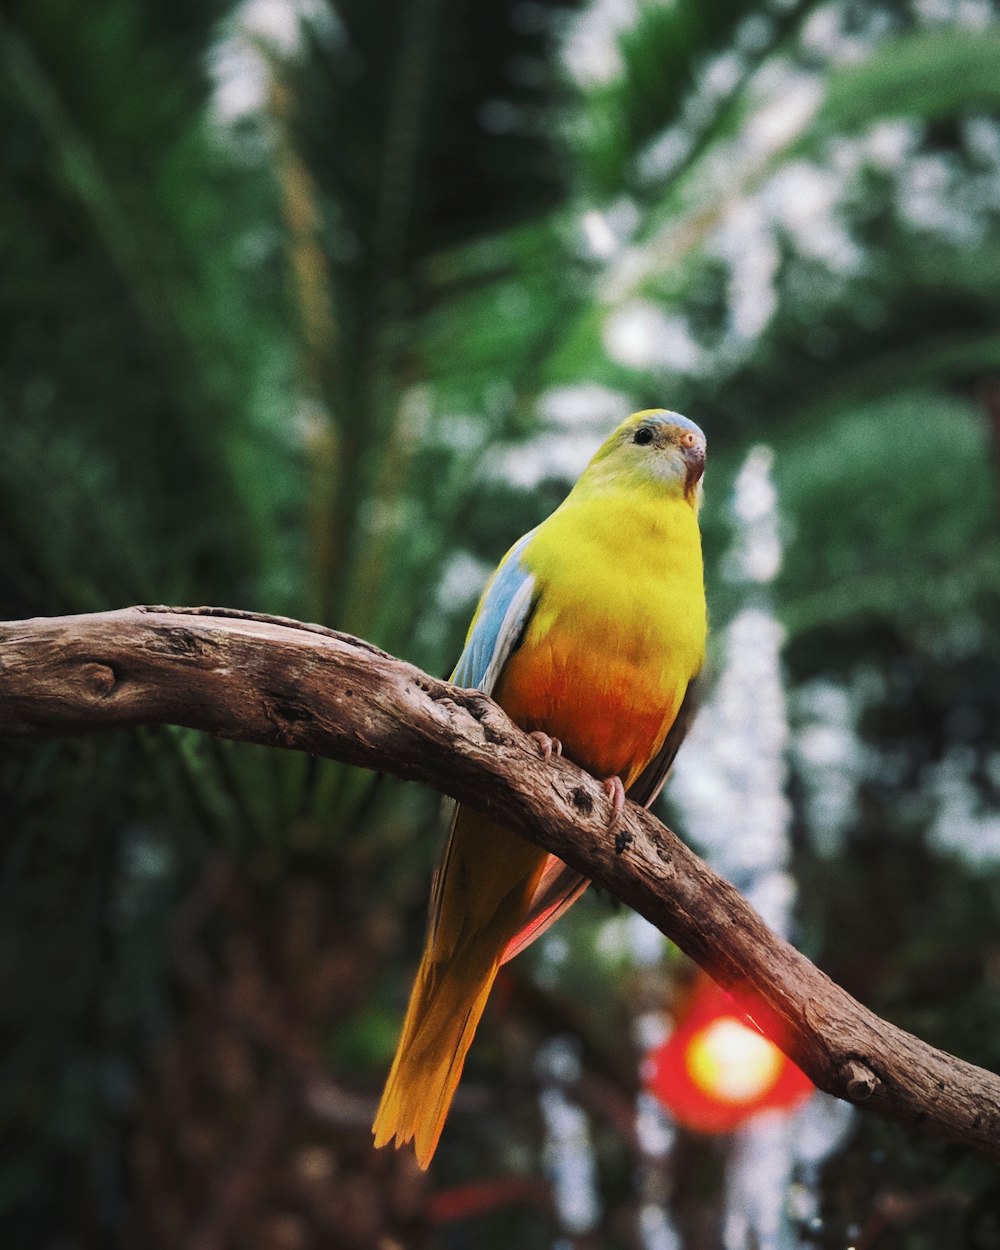 yellow and orange bird on tree